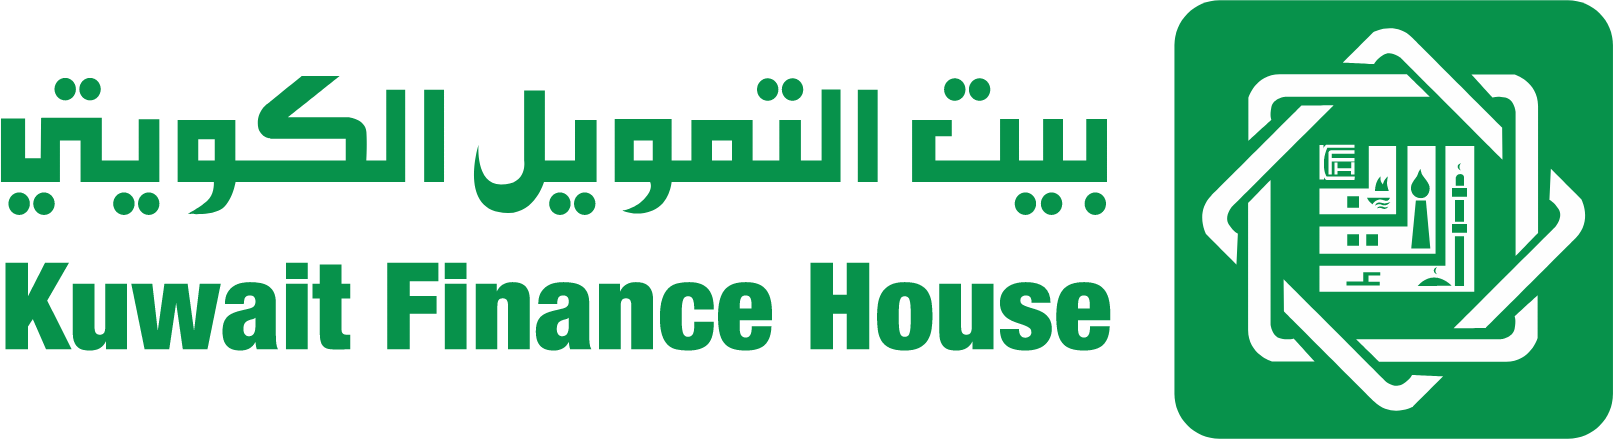 Kuwait Finance House logo large (transparent PNG)